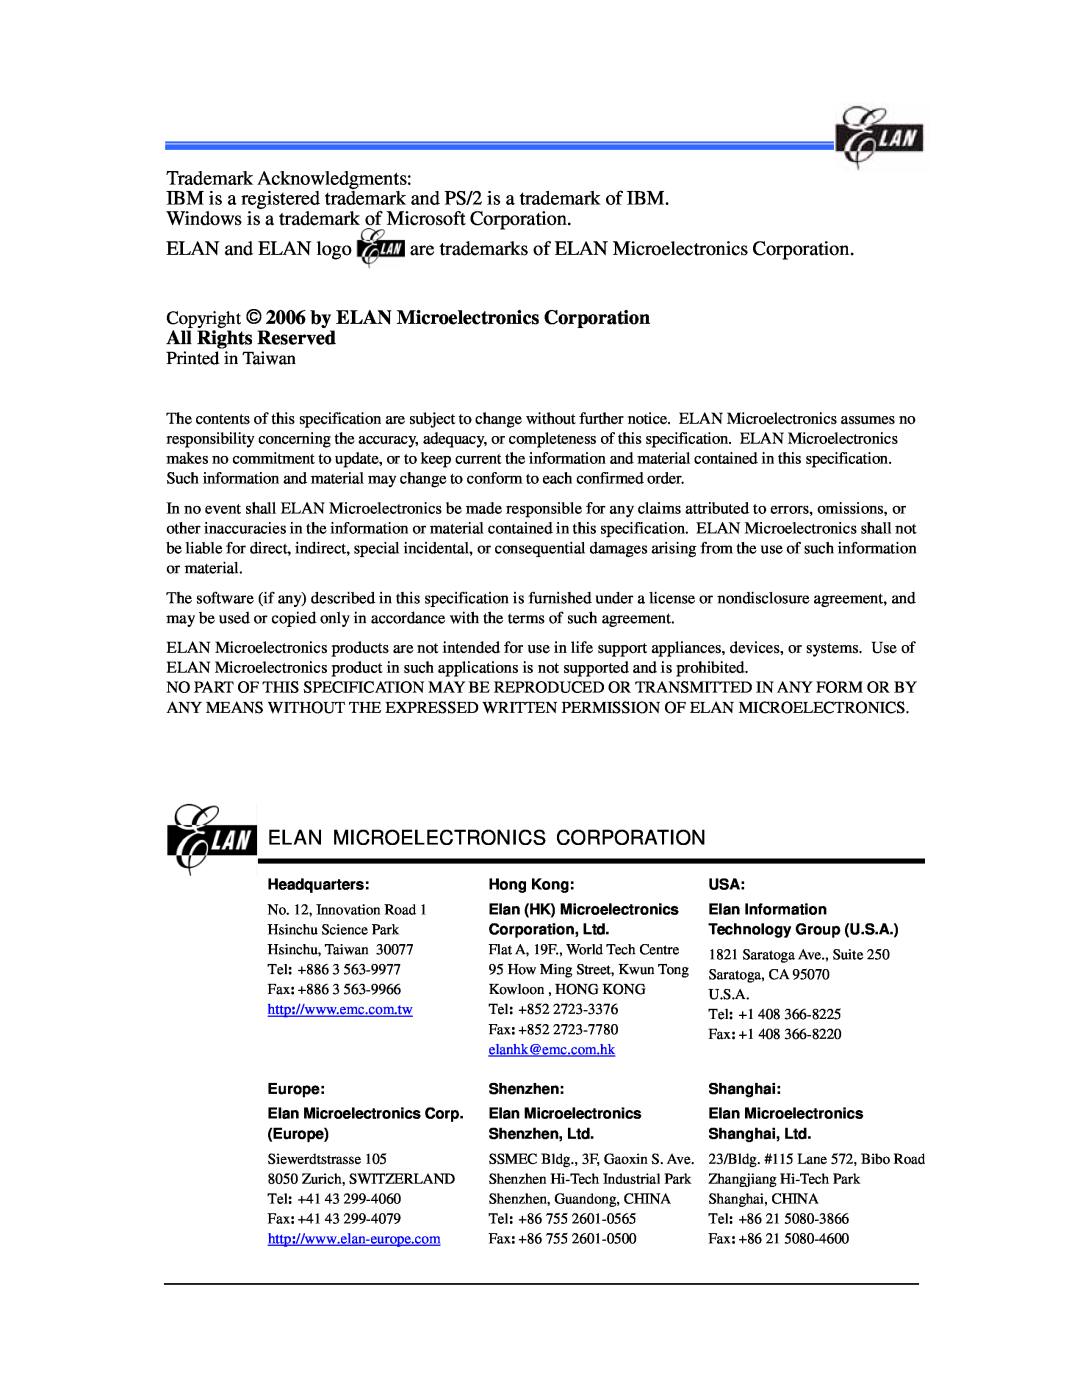 IBM EM78P312N Elan Microelectronics Corporation, Copyright 2006 by ELAN Microelectronics Corporation, All Rights Reserved 